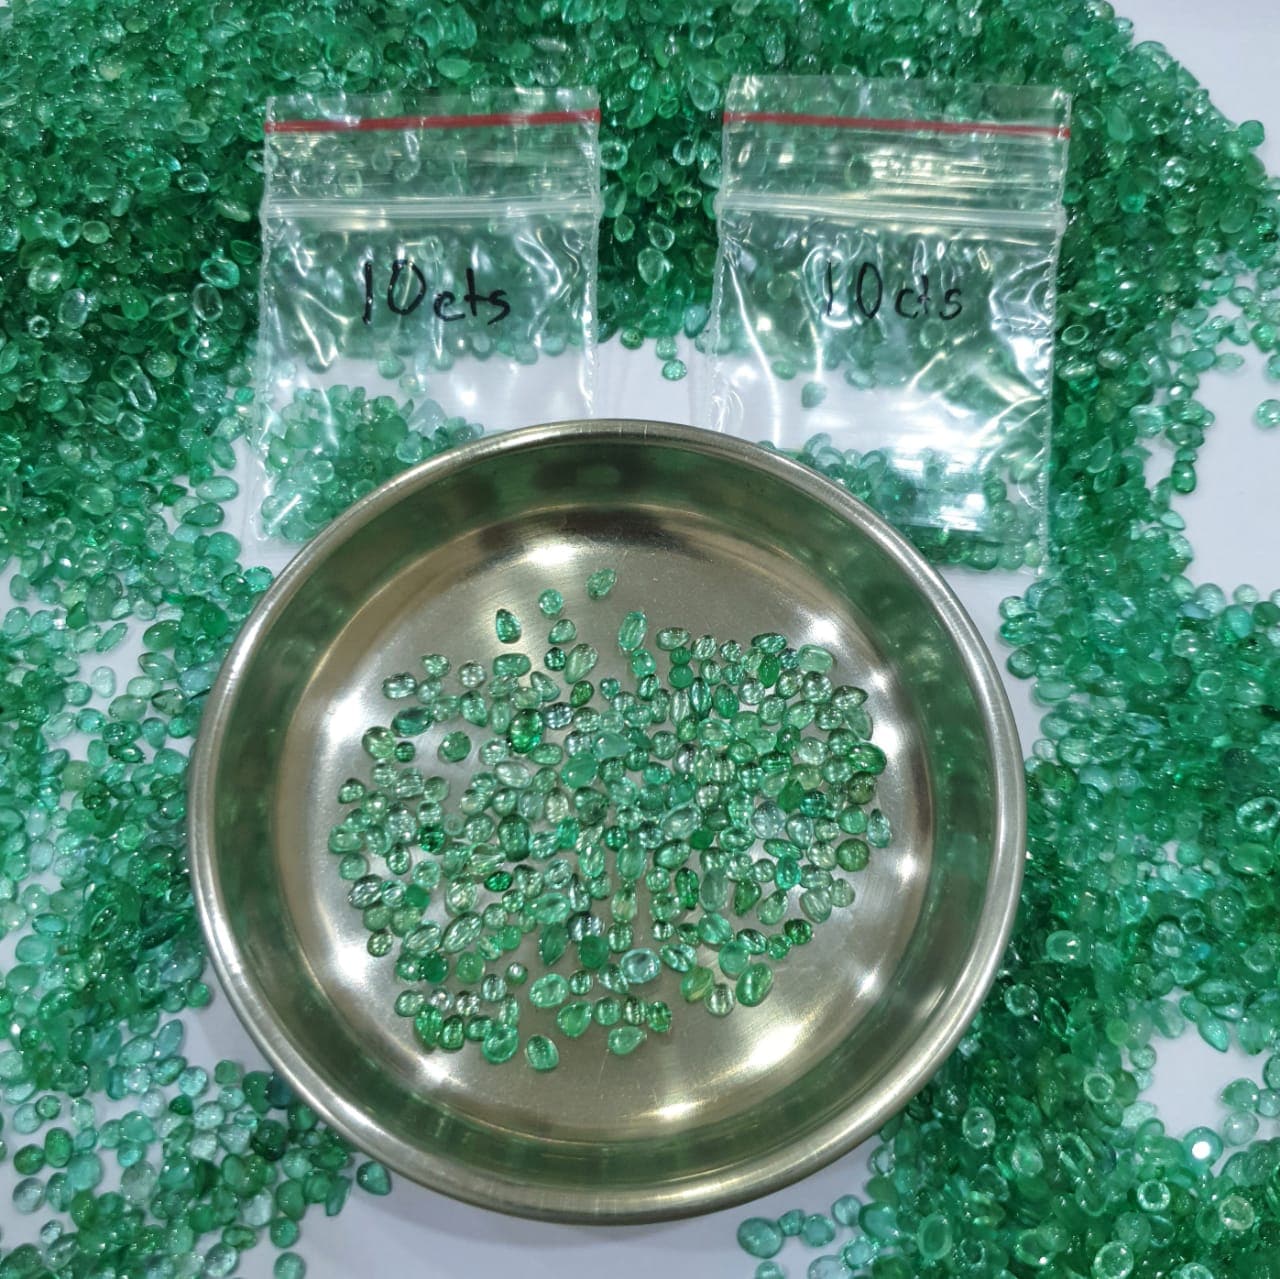 10 Cts of Thin Emerald cabochons | 100pcs Approx 2-5mm - The LabradoriteKing